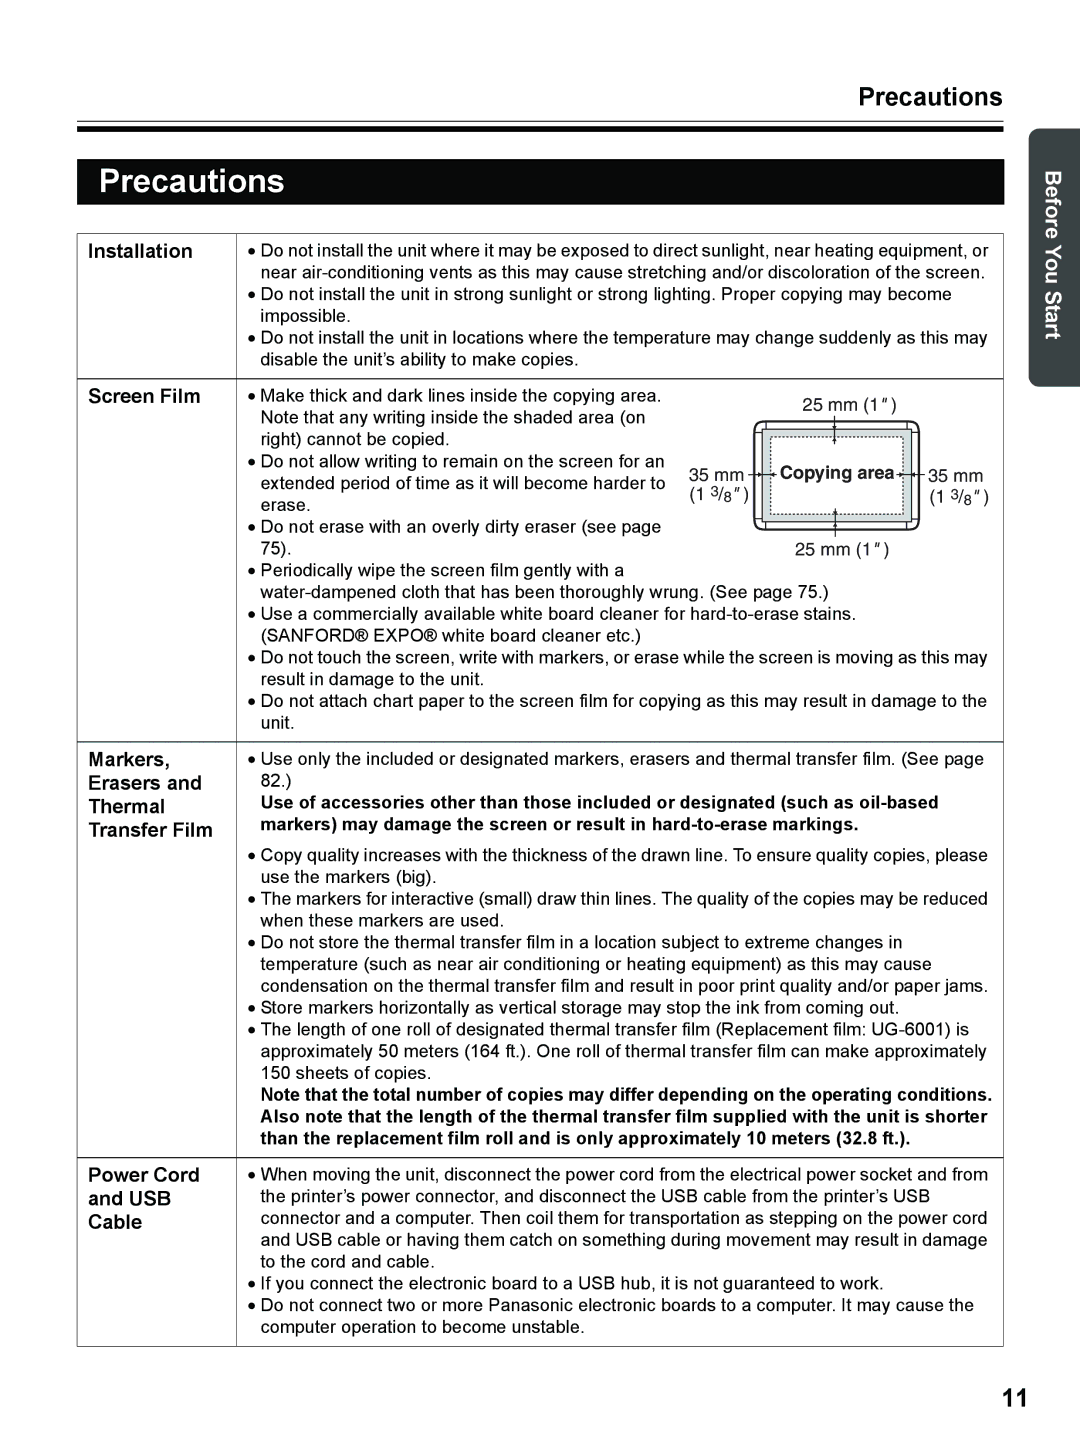 Panasonic UB-8325 operating instructions Precautions 